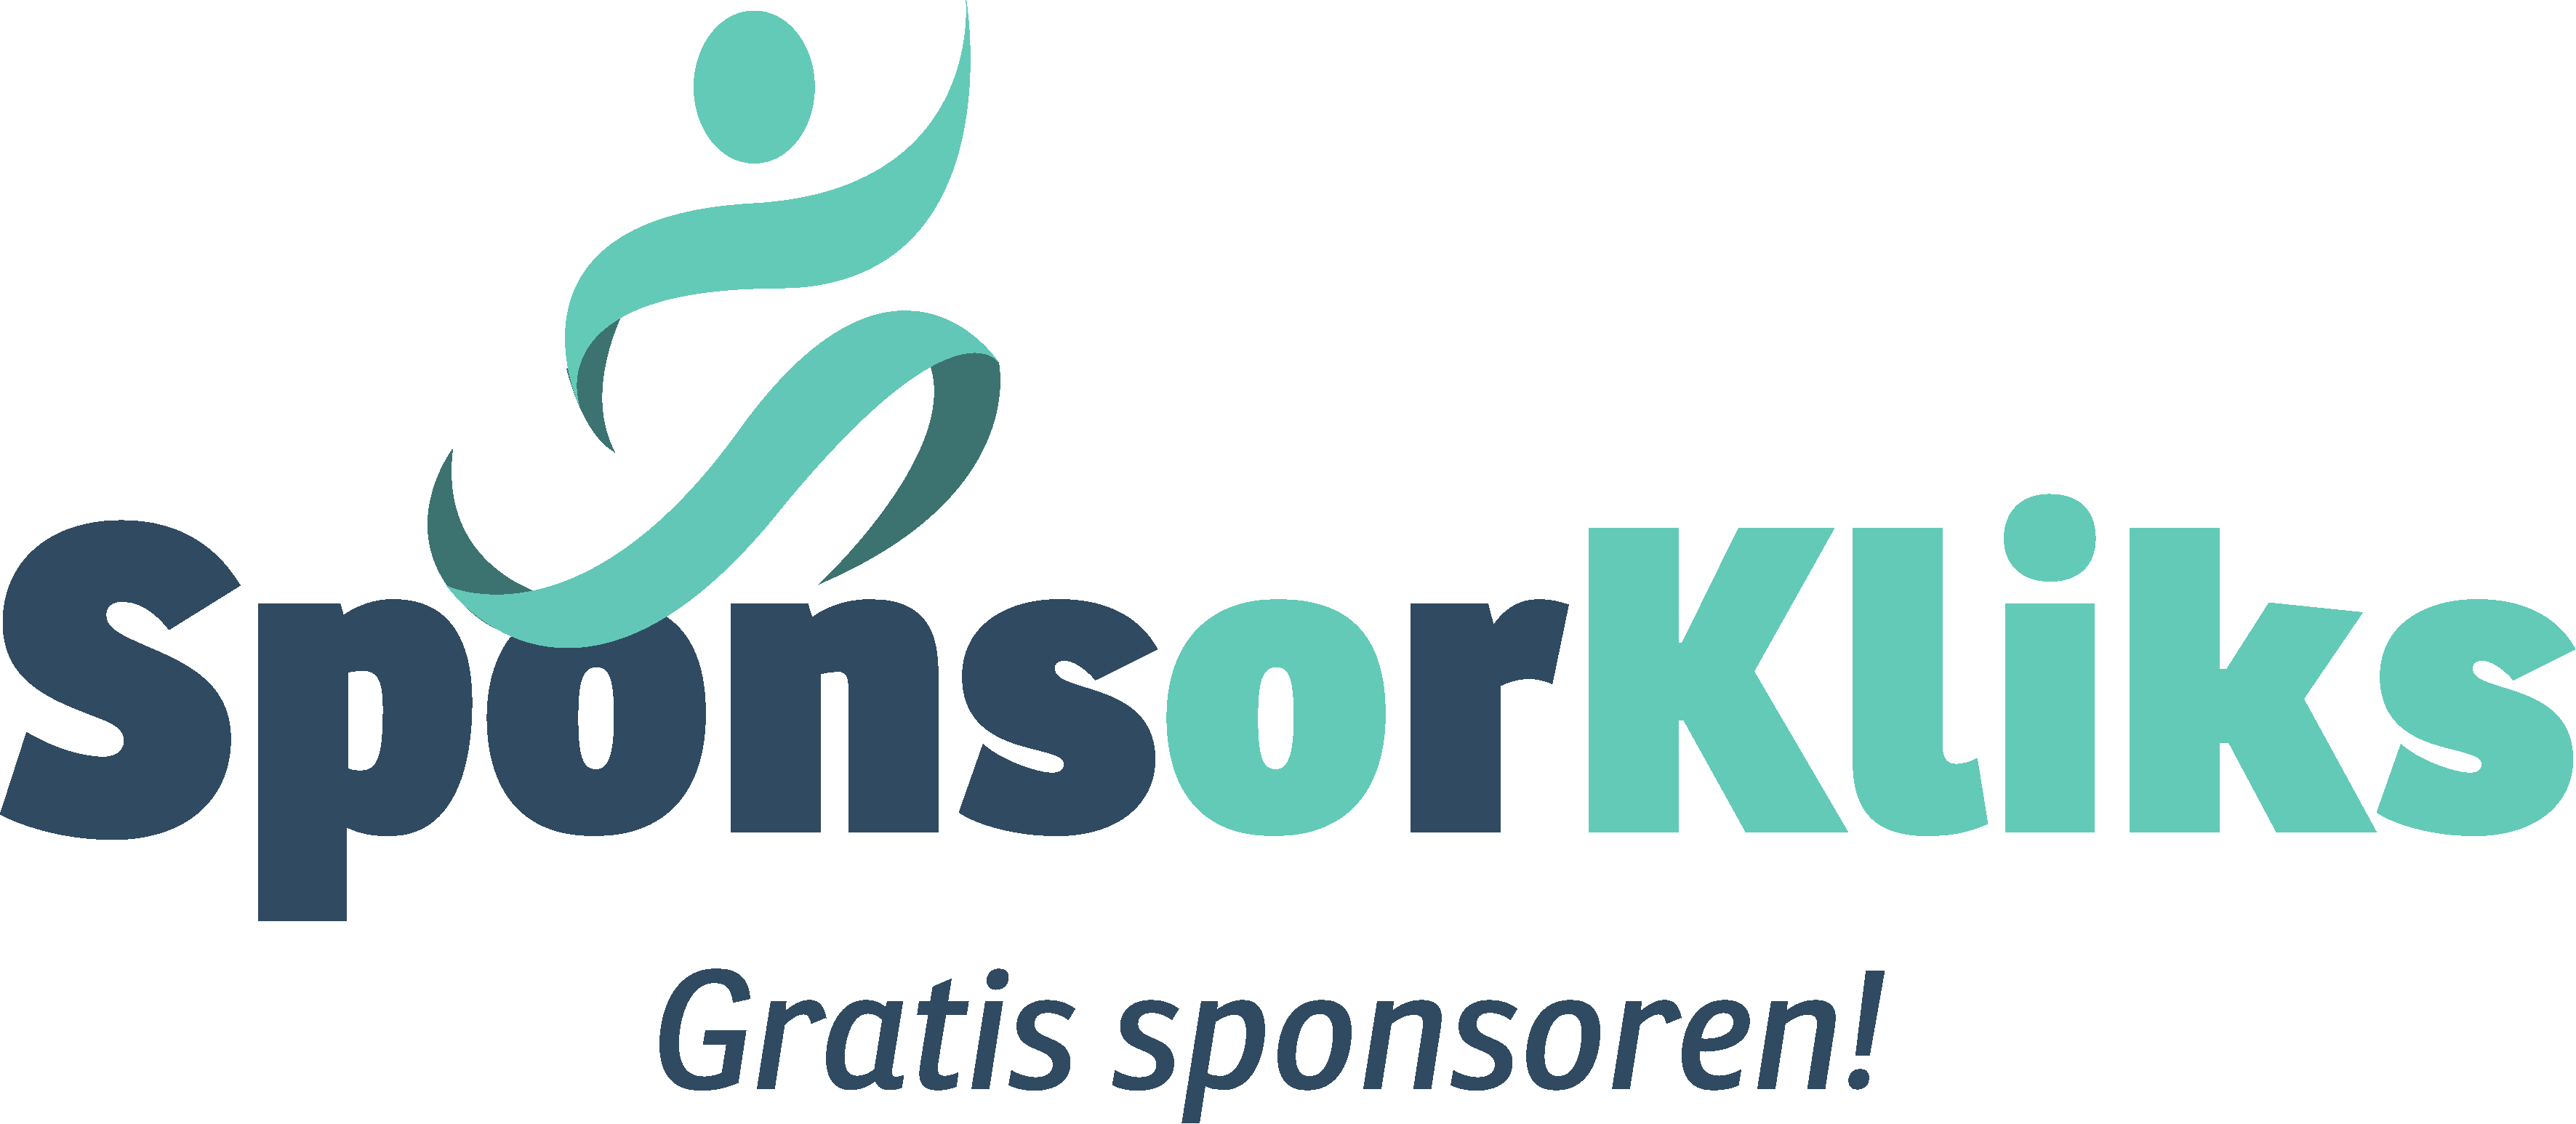 sponsorkliks nl white horizontal